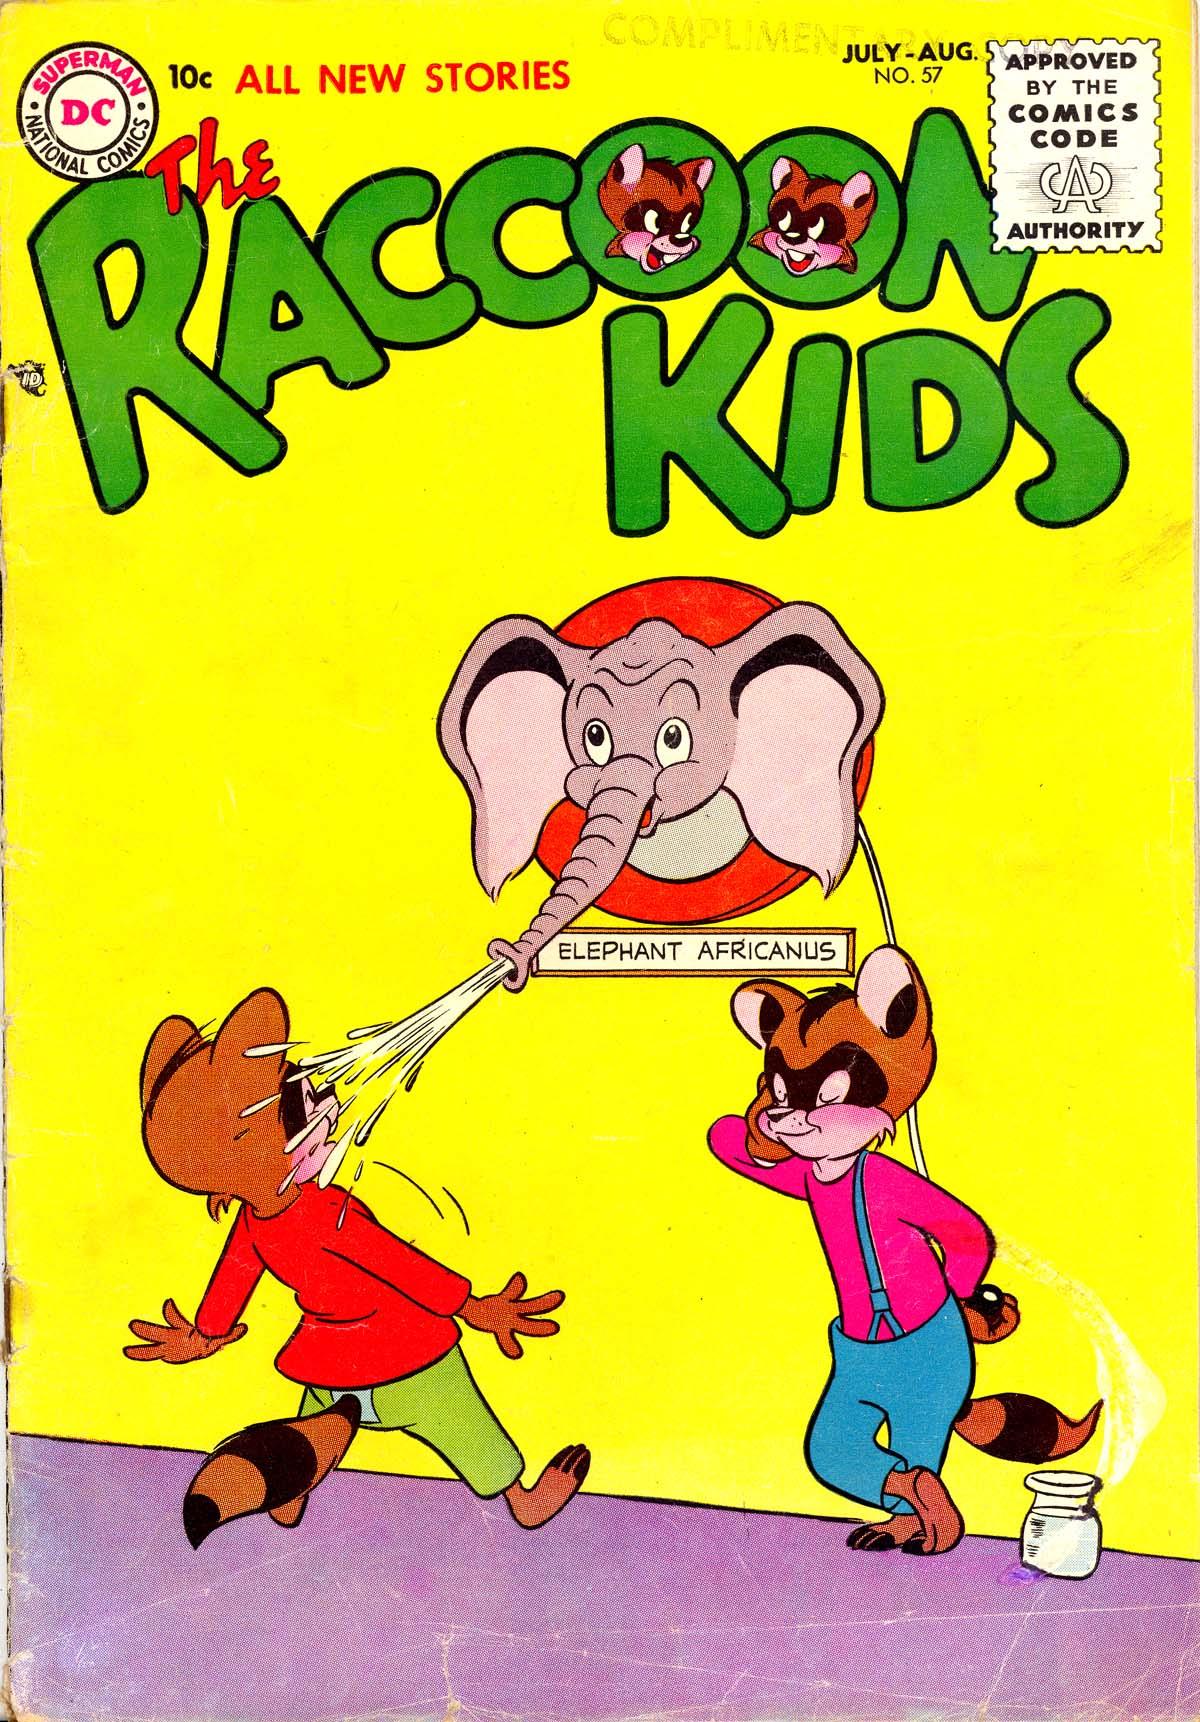 Raccoon Kids Vol. 1 #57